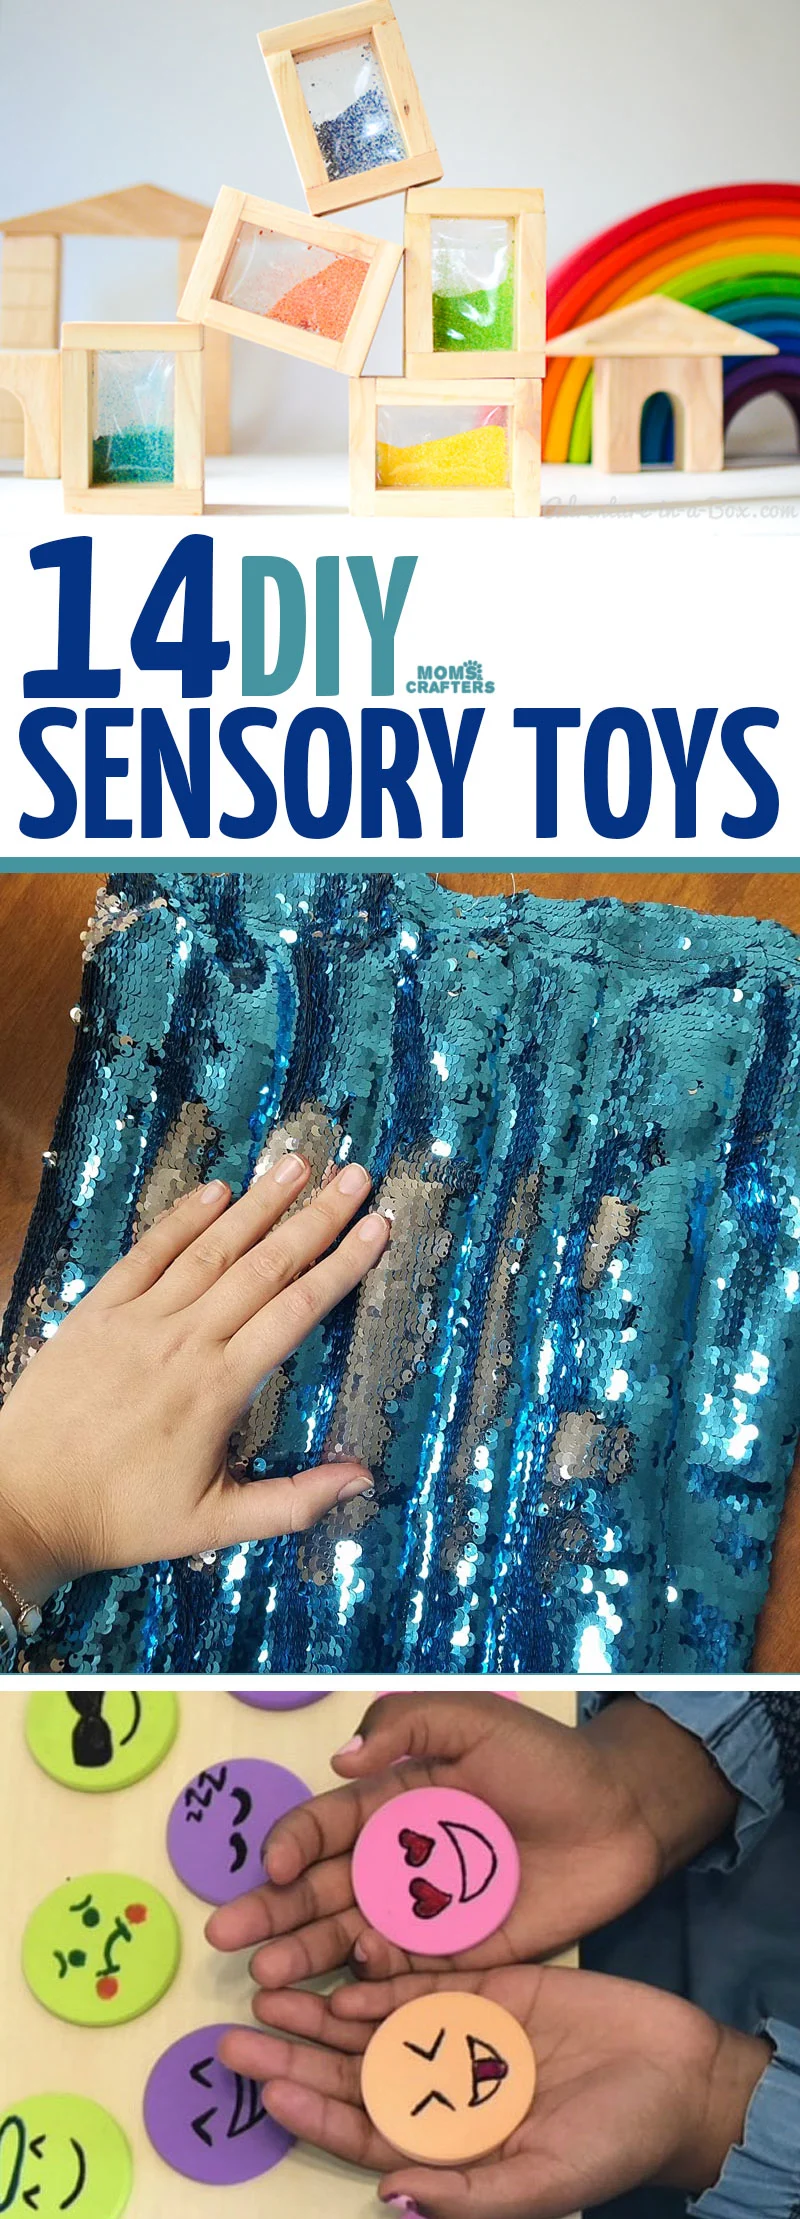 DIY Sensory Toys pic